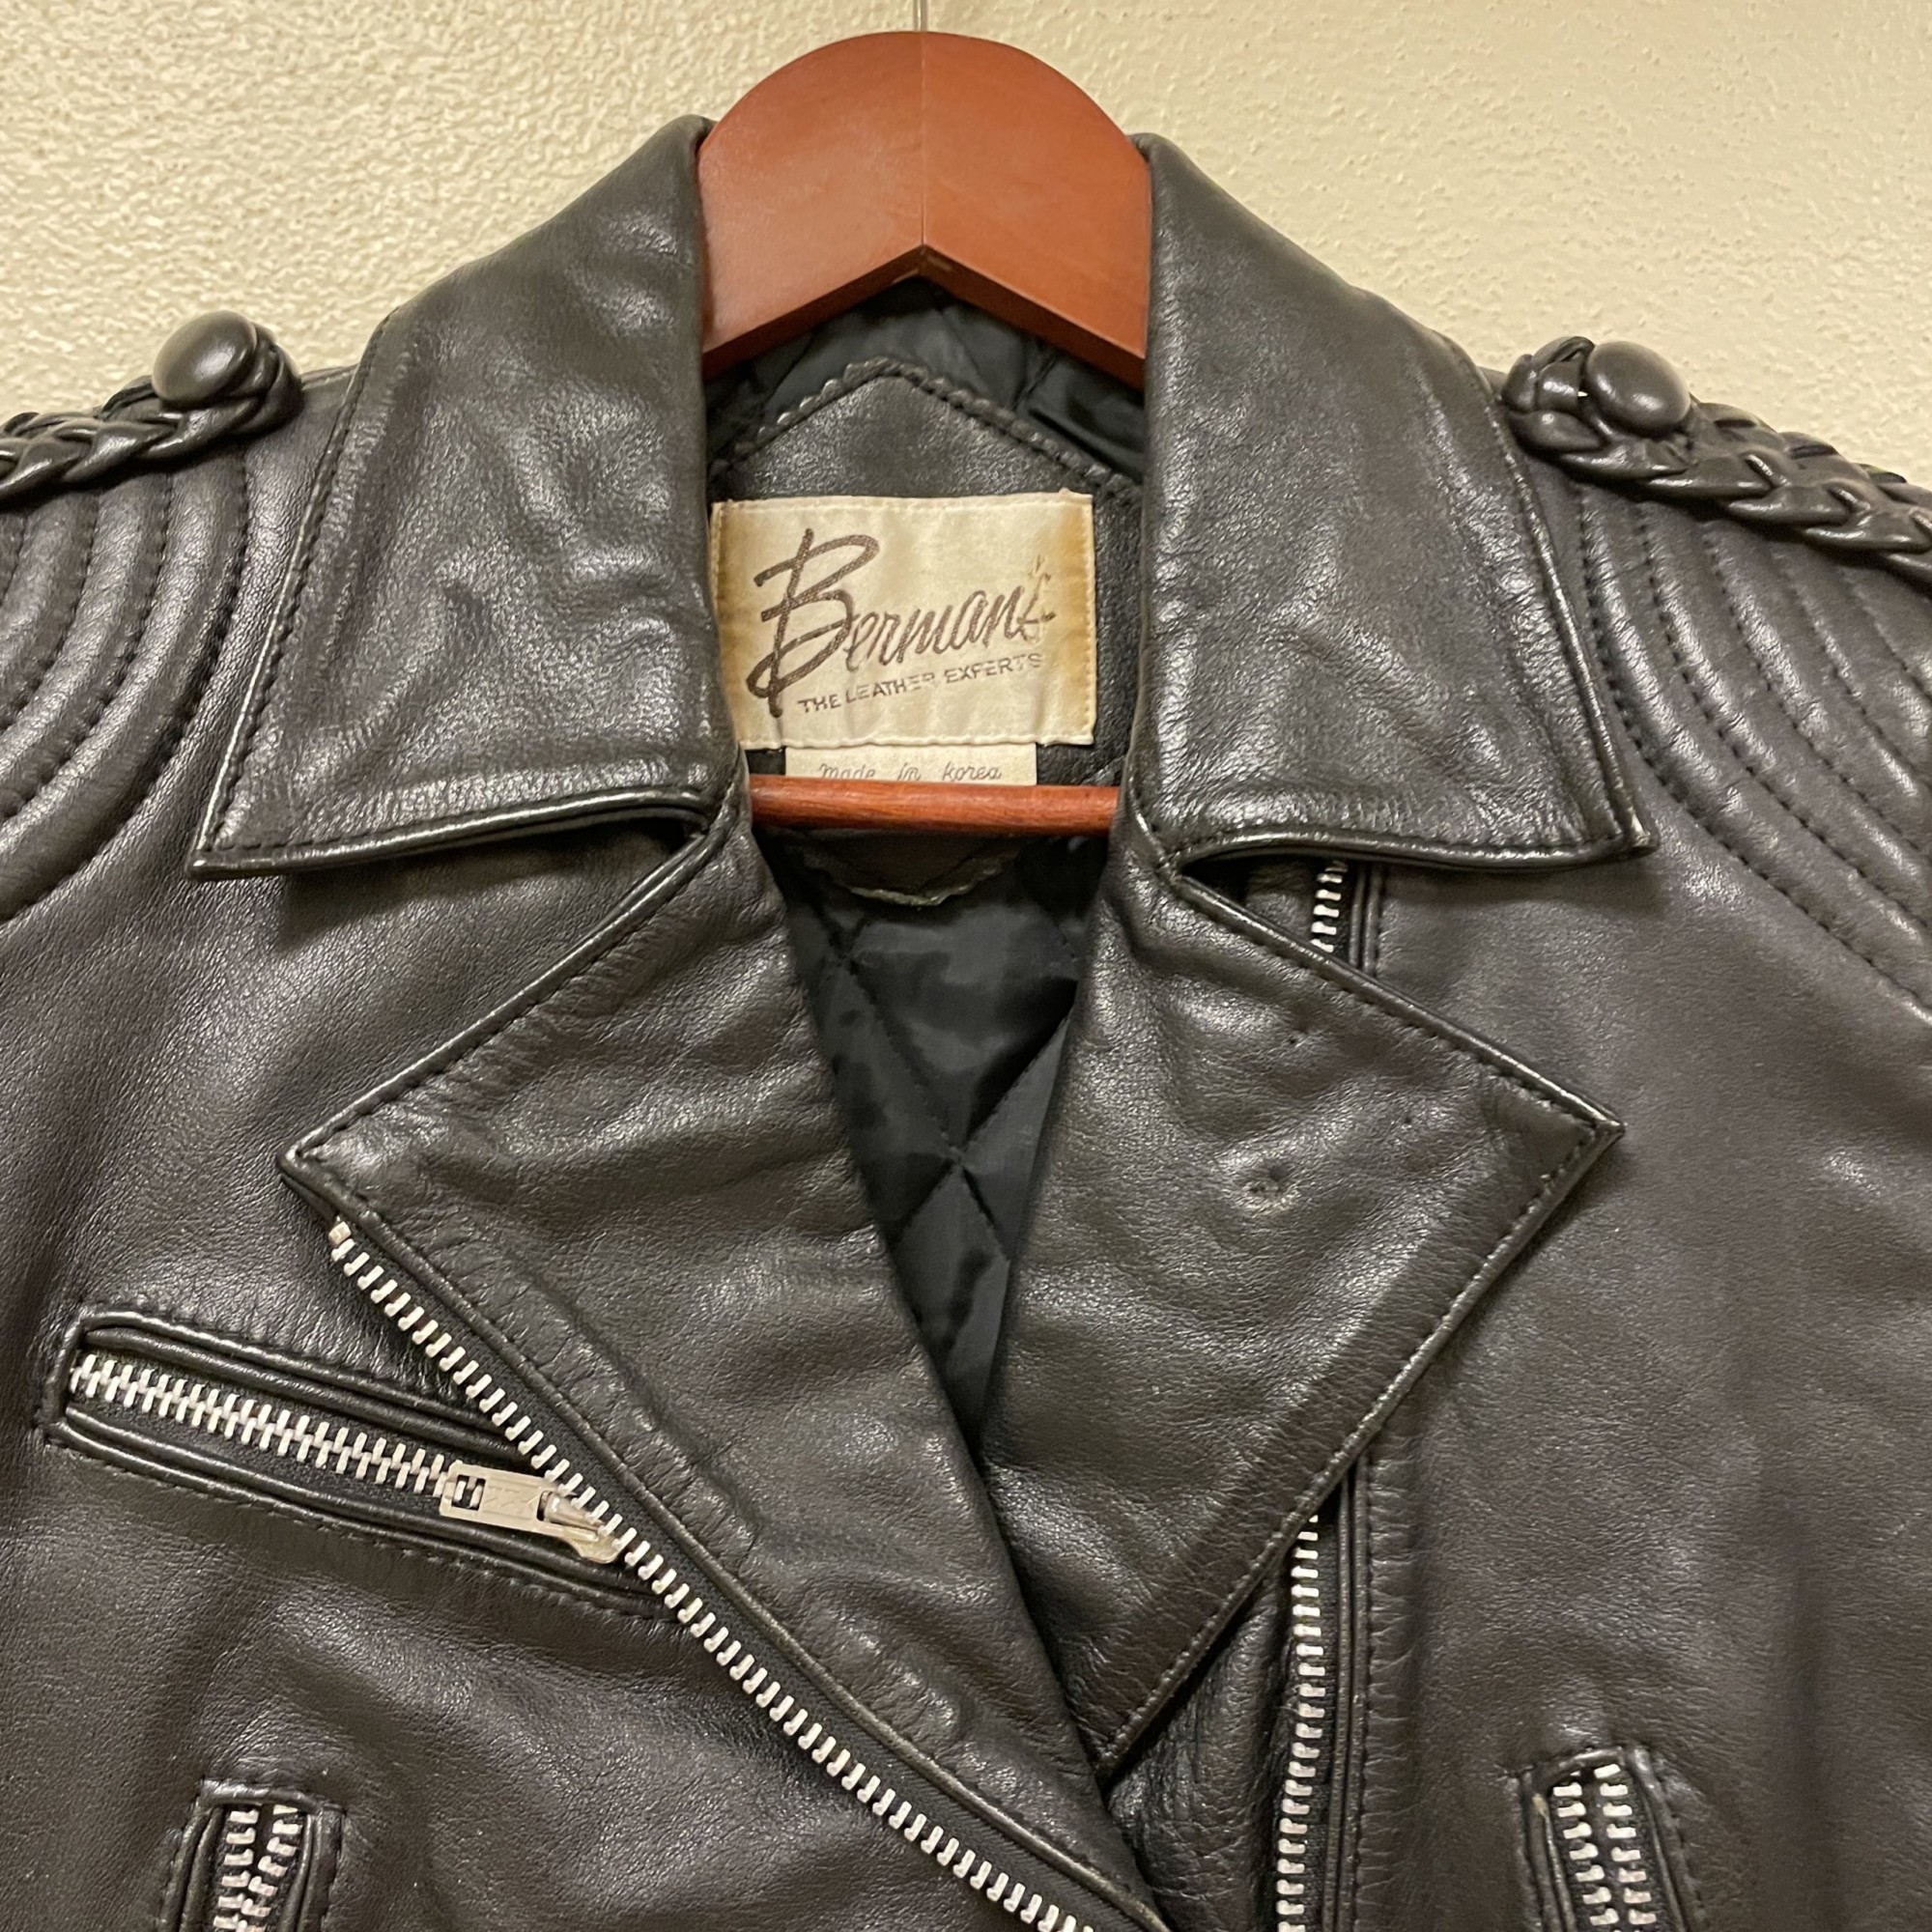 Berman’s Experts Motorcycle Vintage Leather Jacket Size 36 Black